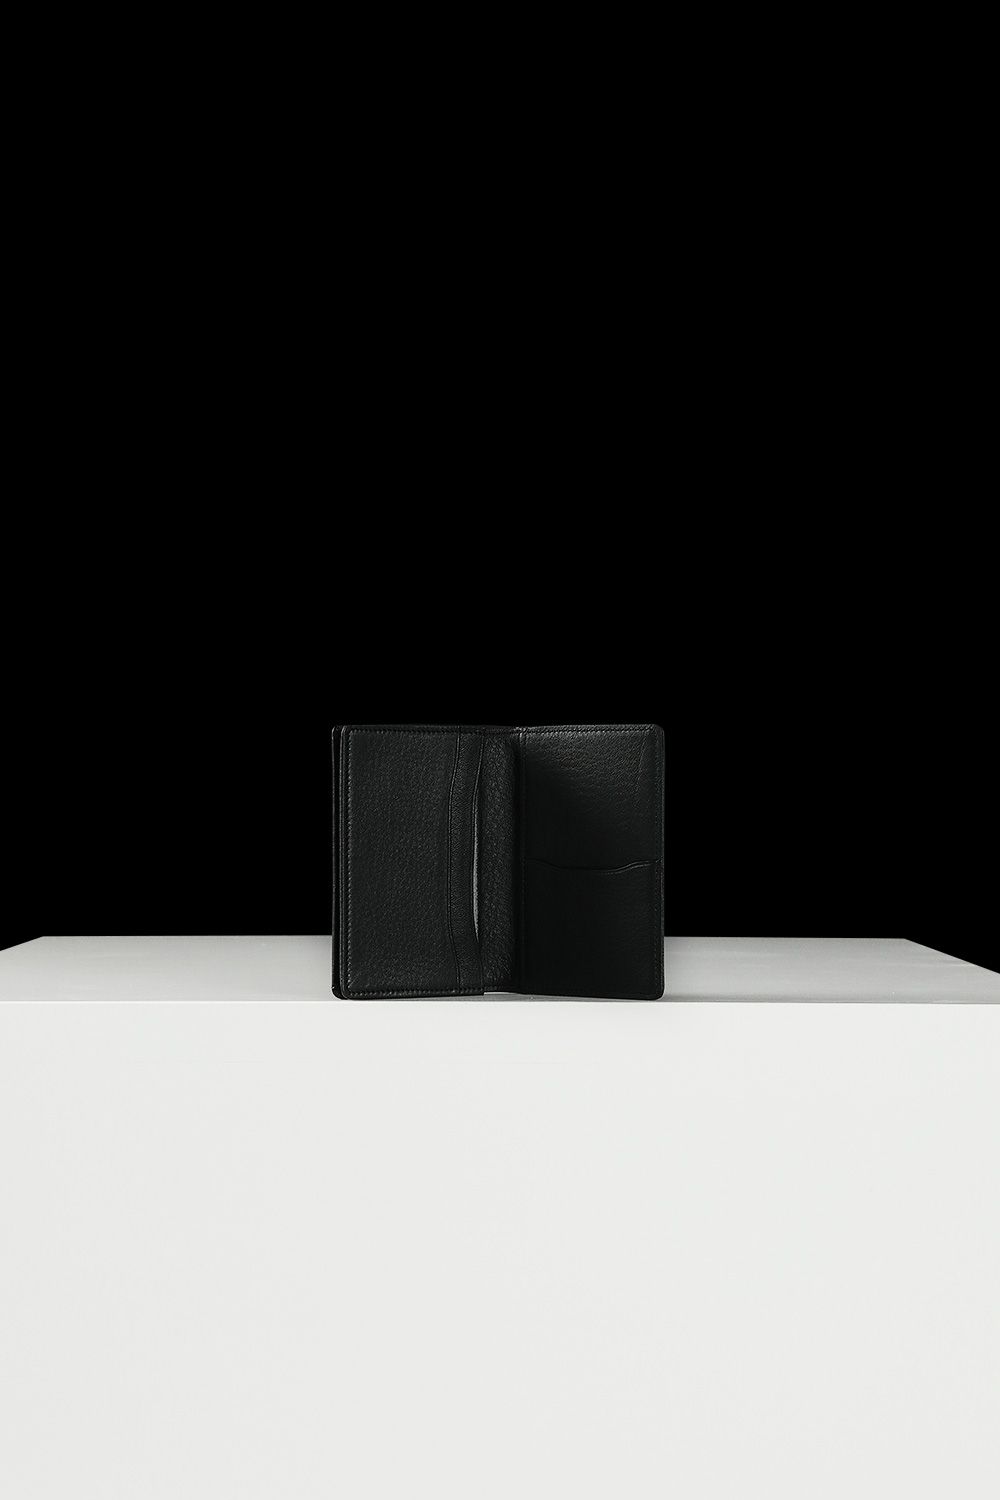 yohji yamamoto - 【discord】GUSSET CARD HOLDER(BLACK) | Acacia